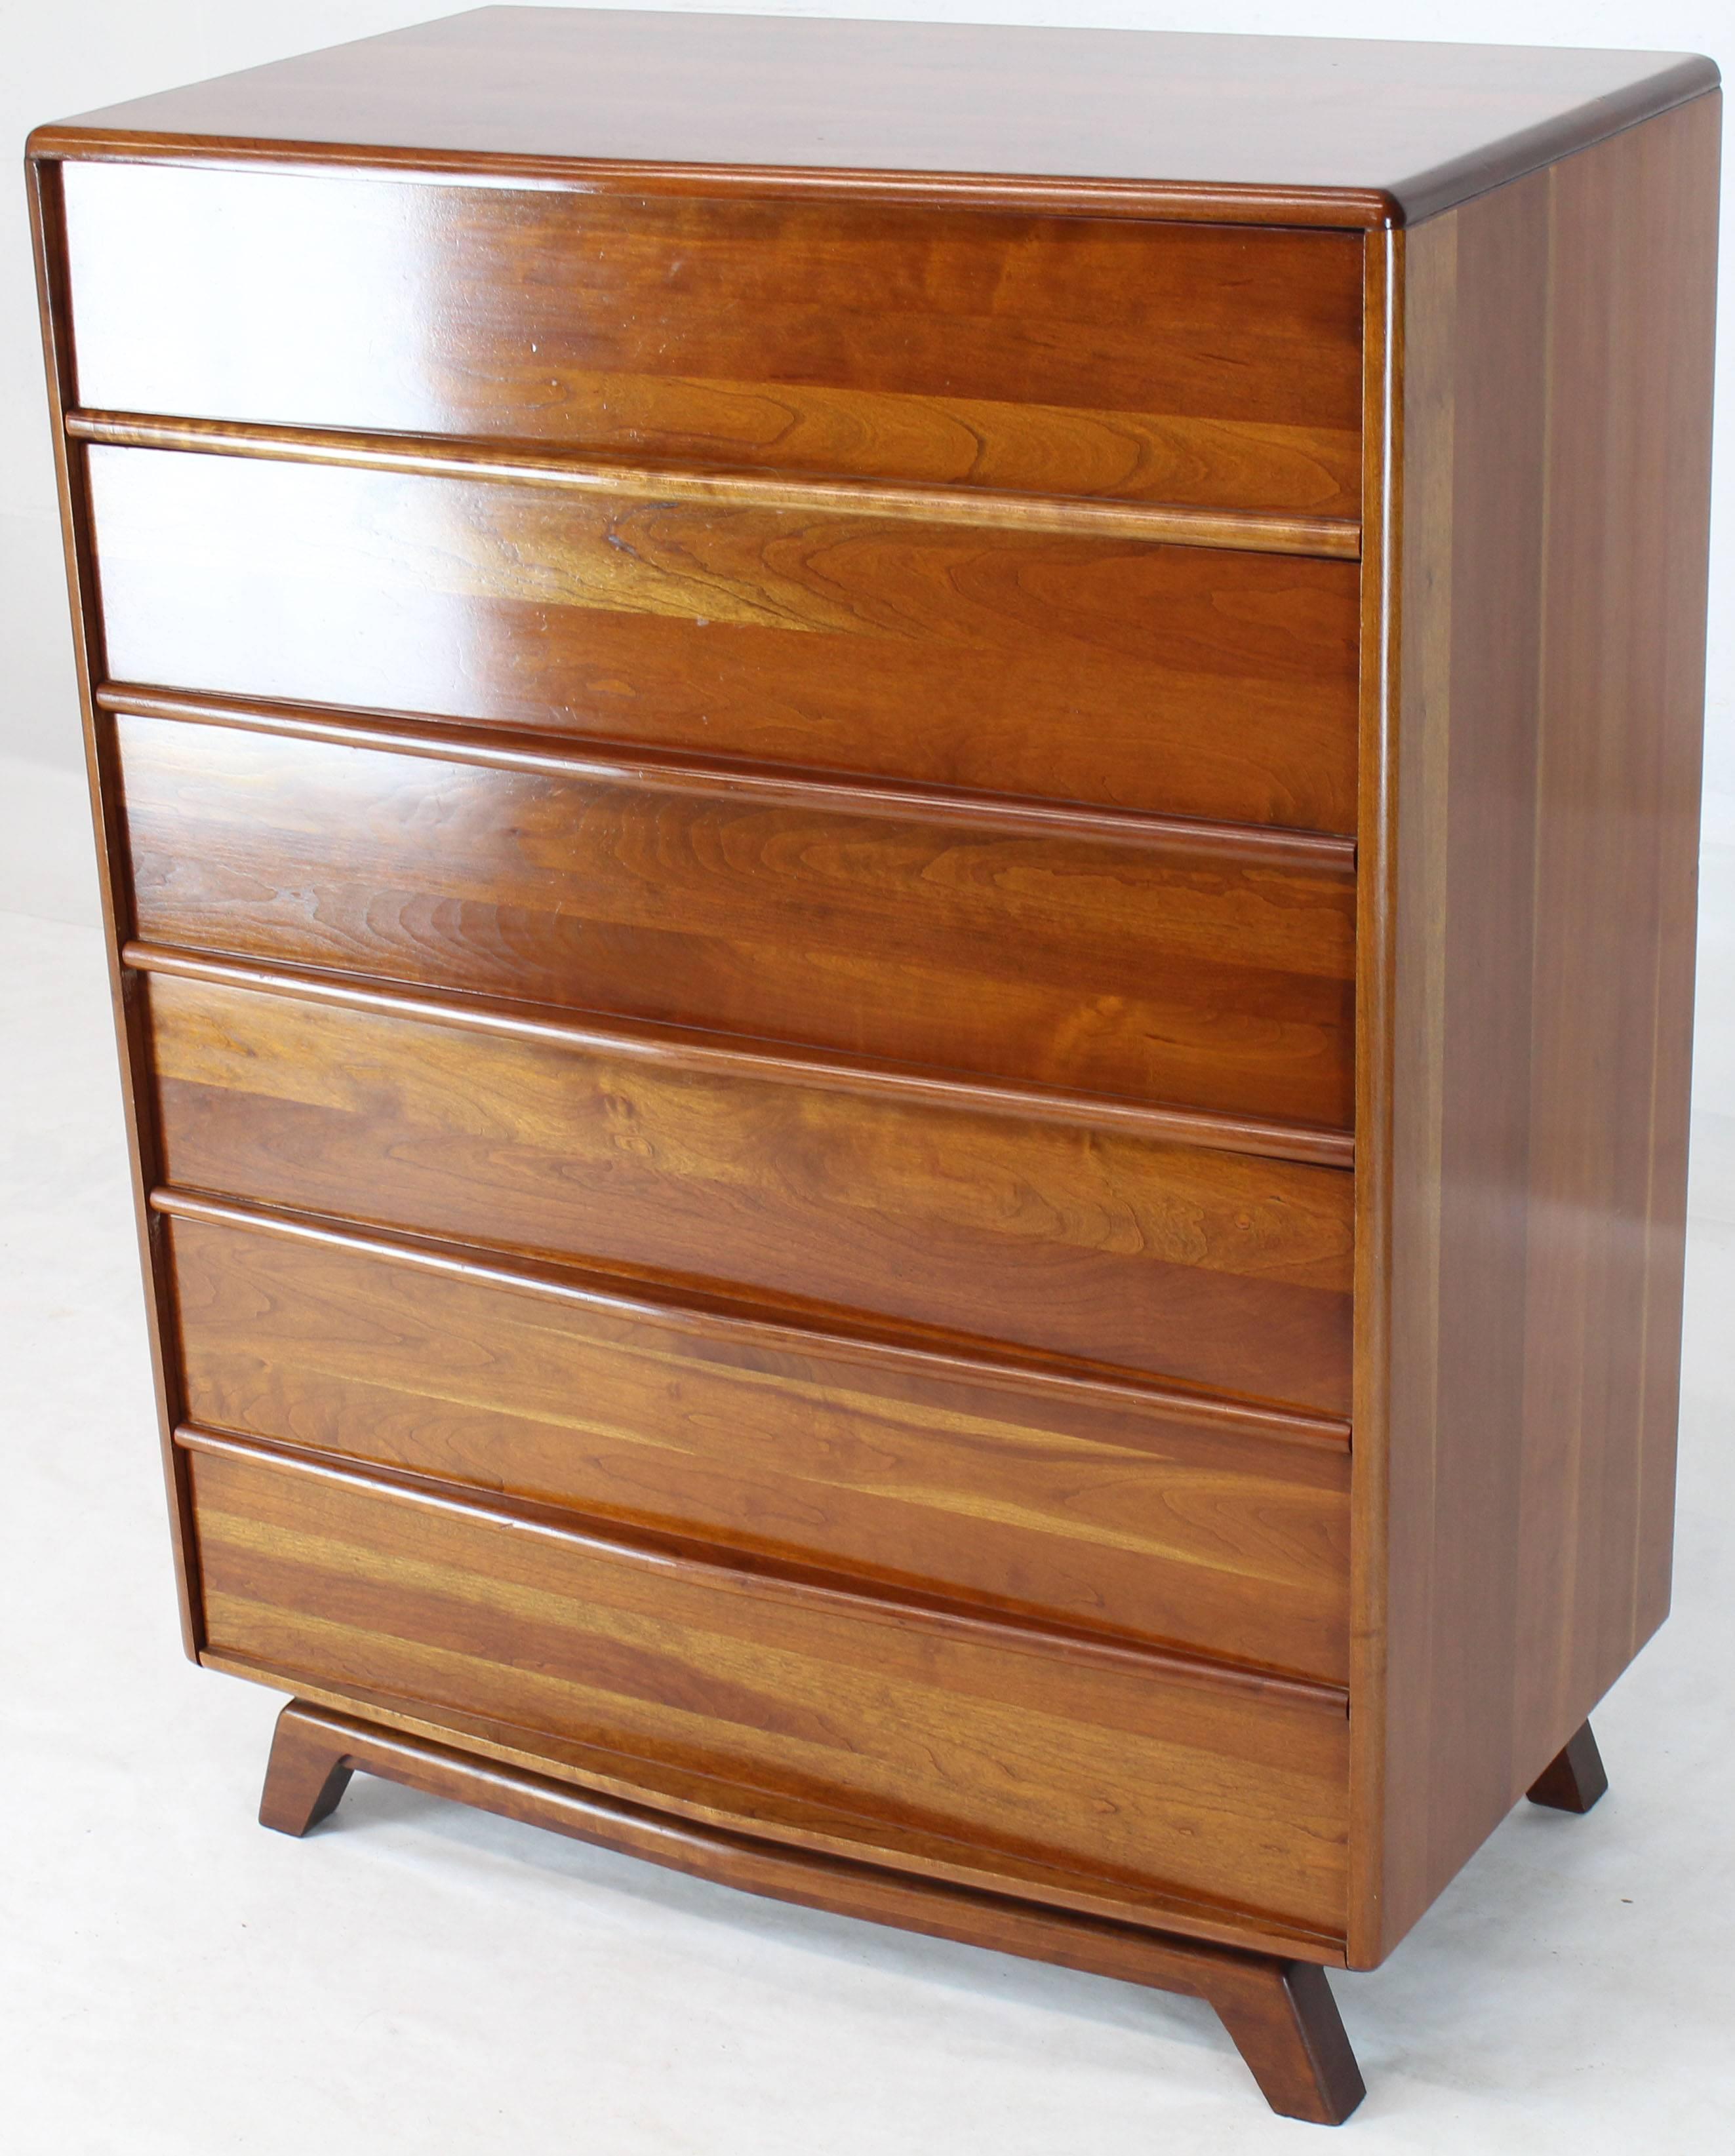 Beautiful wood pattern Mid-Century Modern design solid cherrywood high chest.